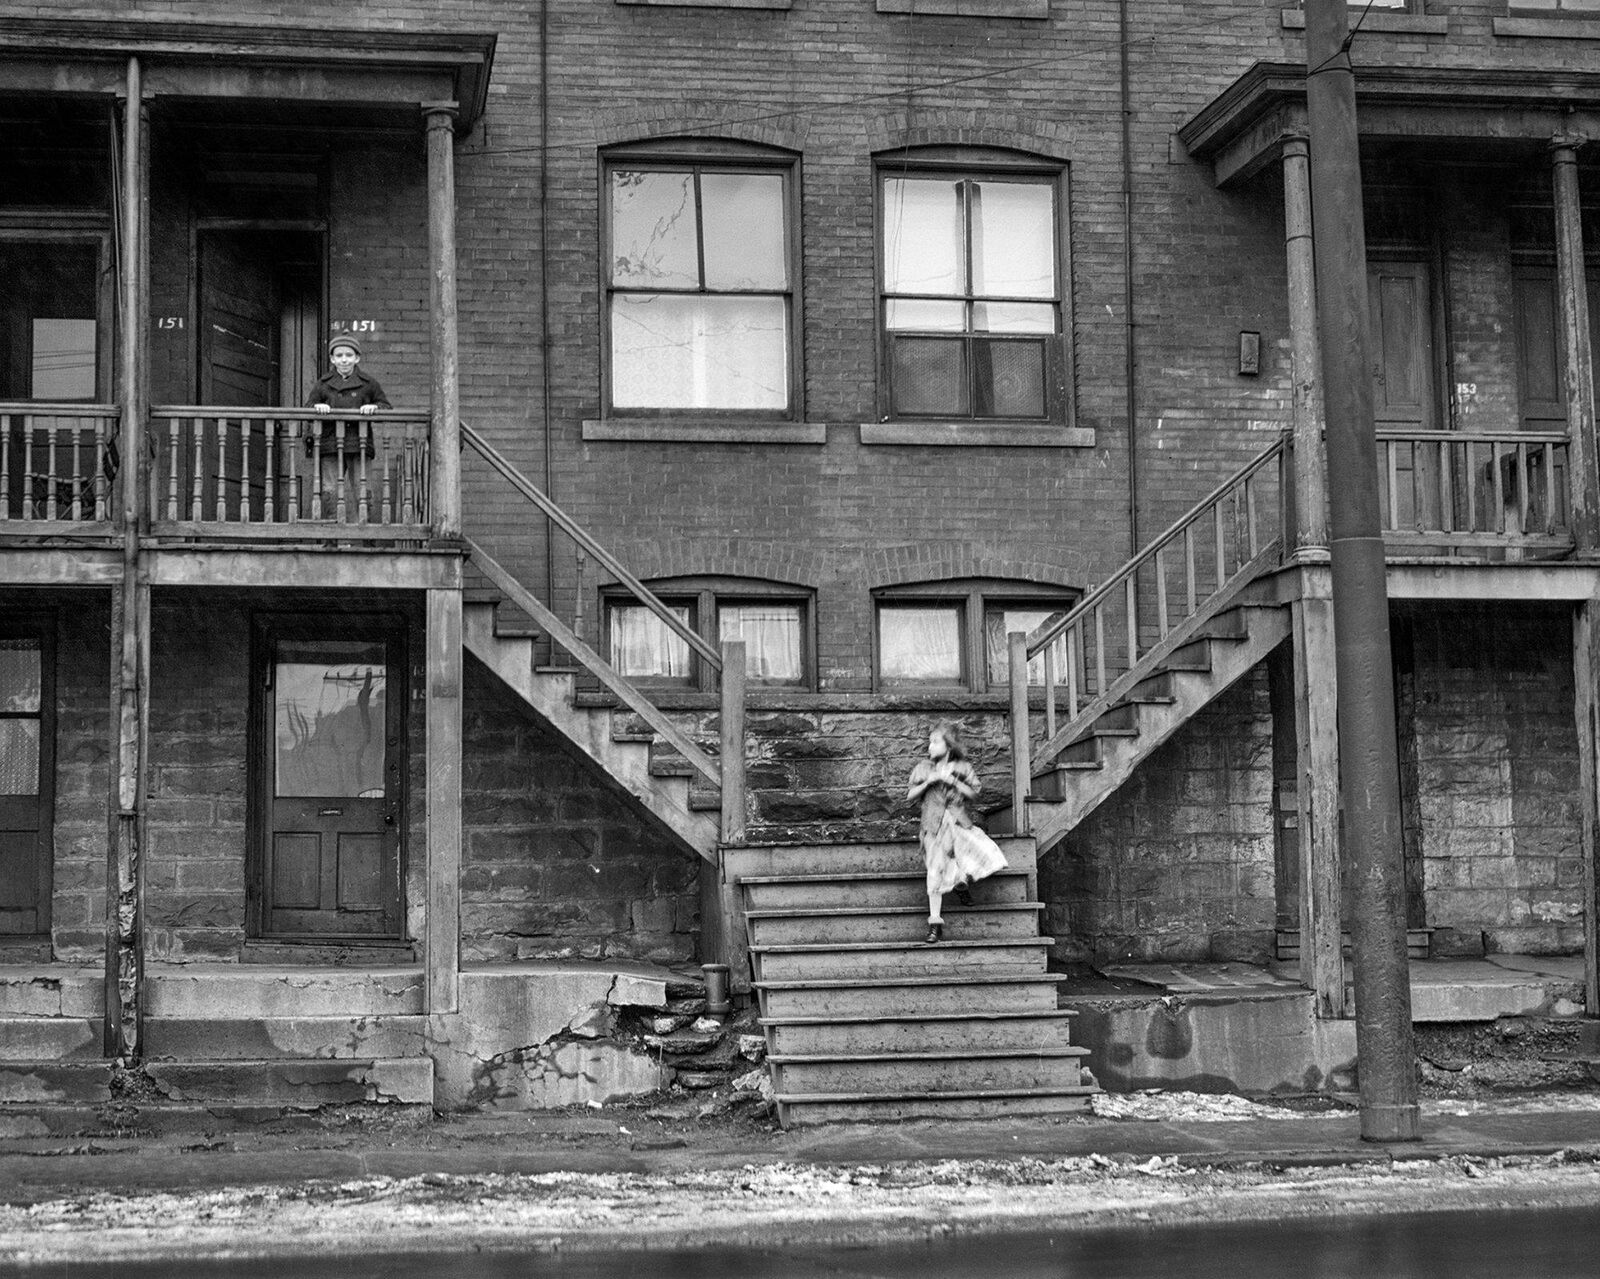 1941 PITTSBURGH DEPRESSION ERA HOUSING 8x10 BORDERLESS Photo